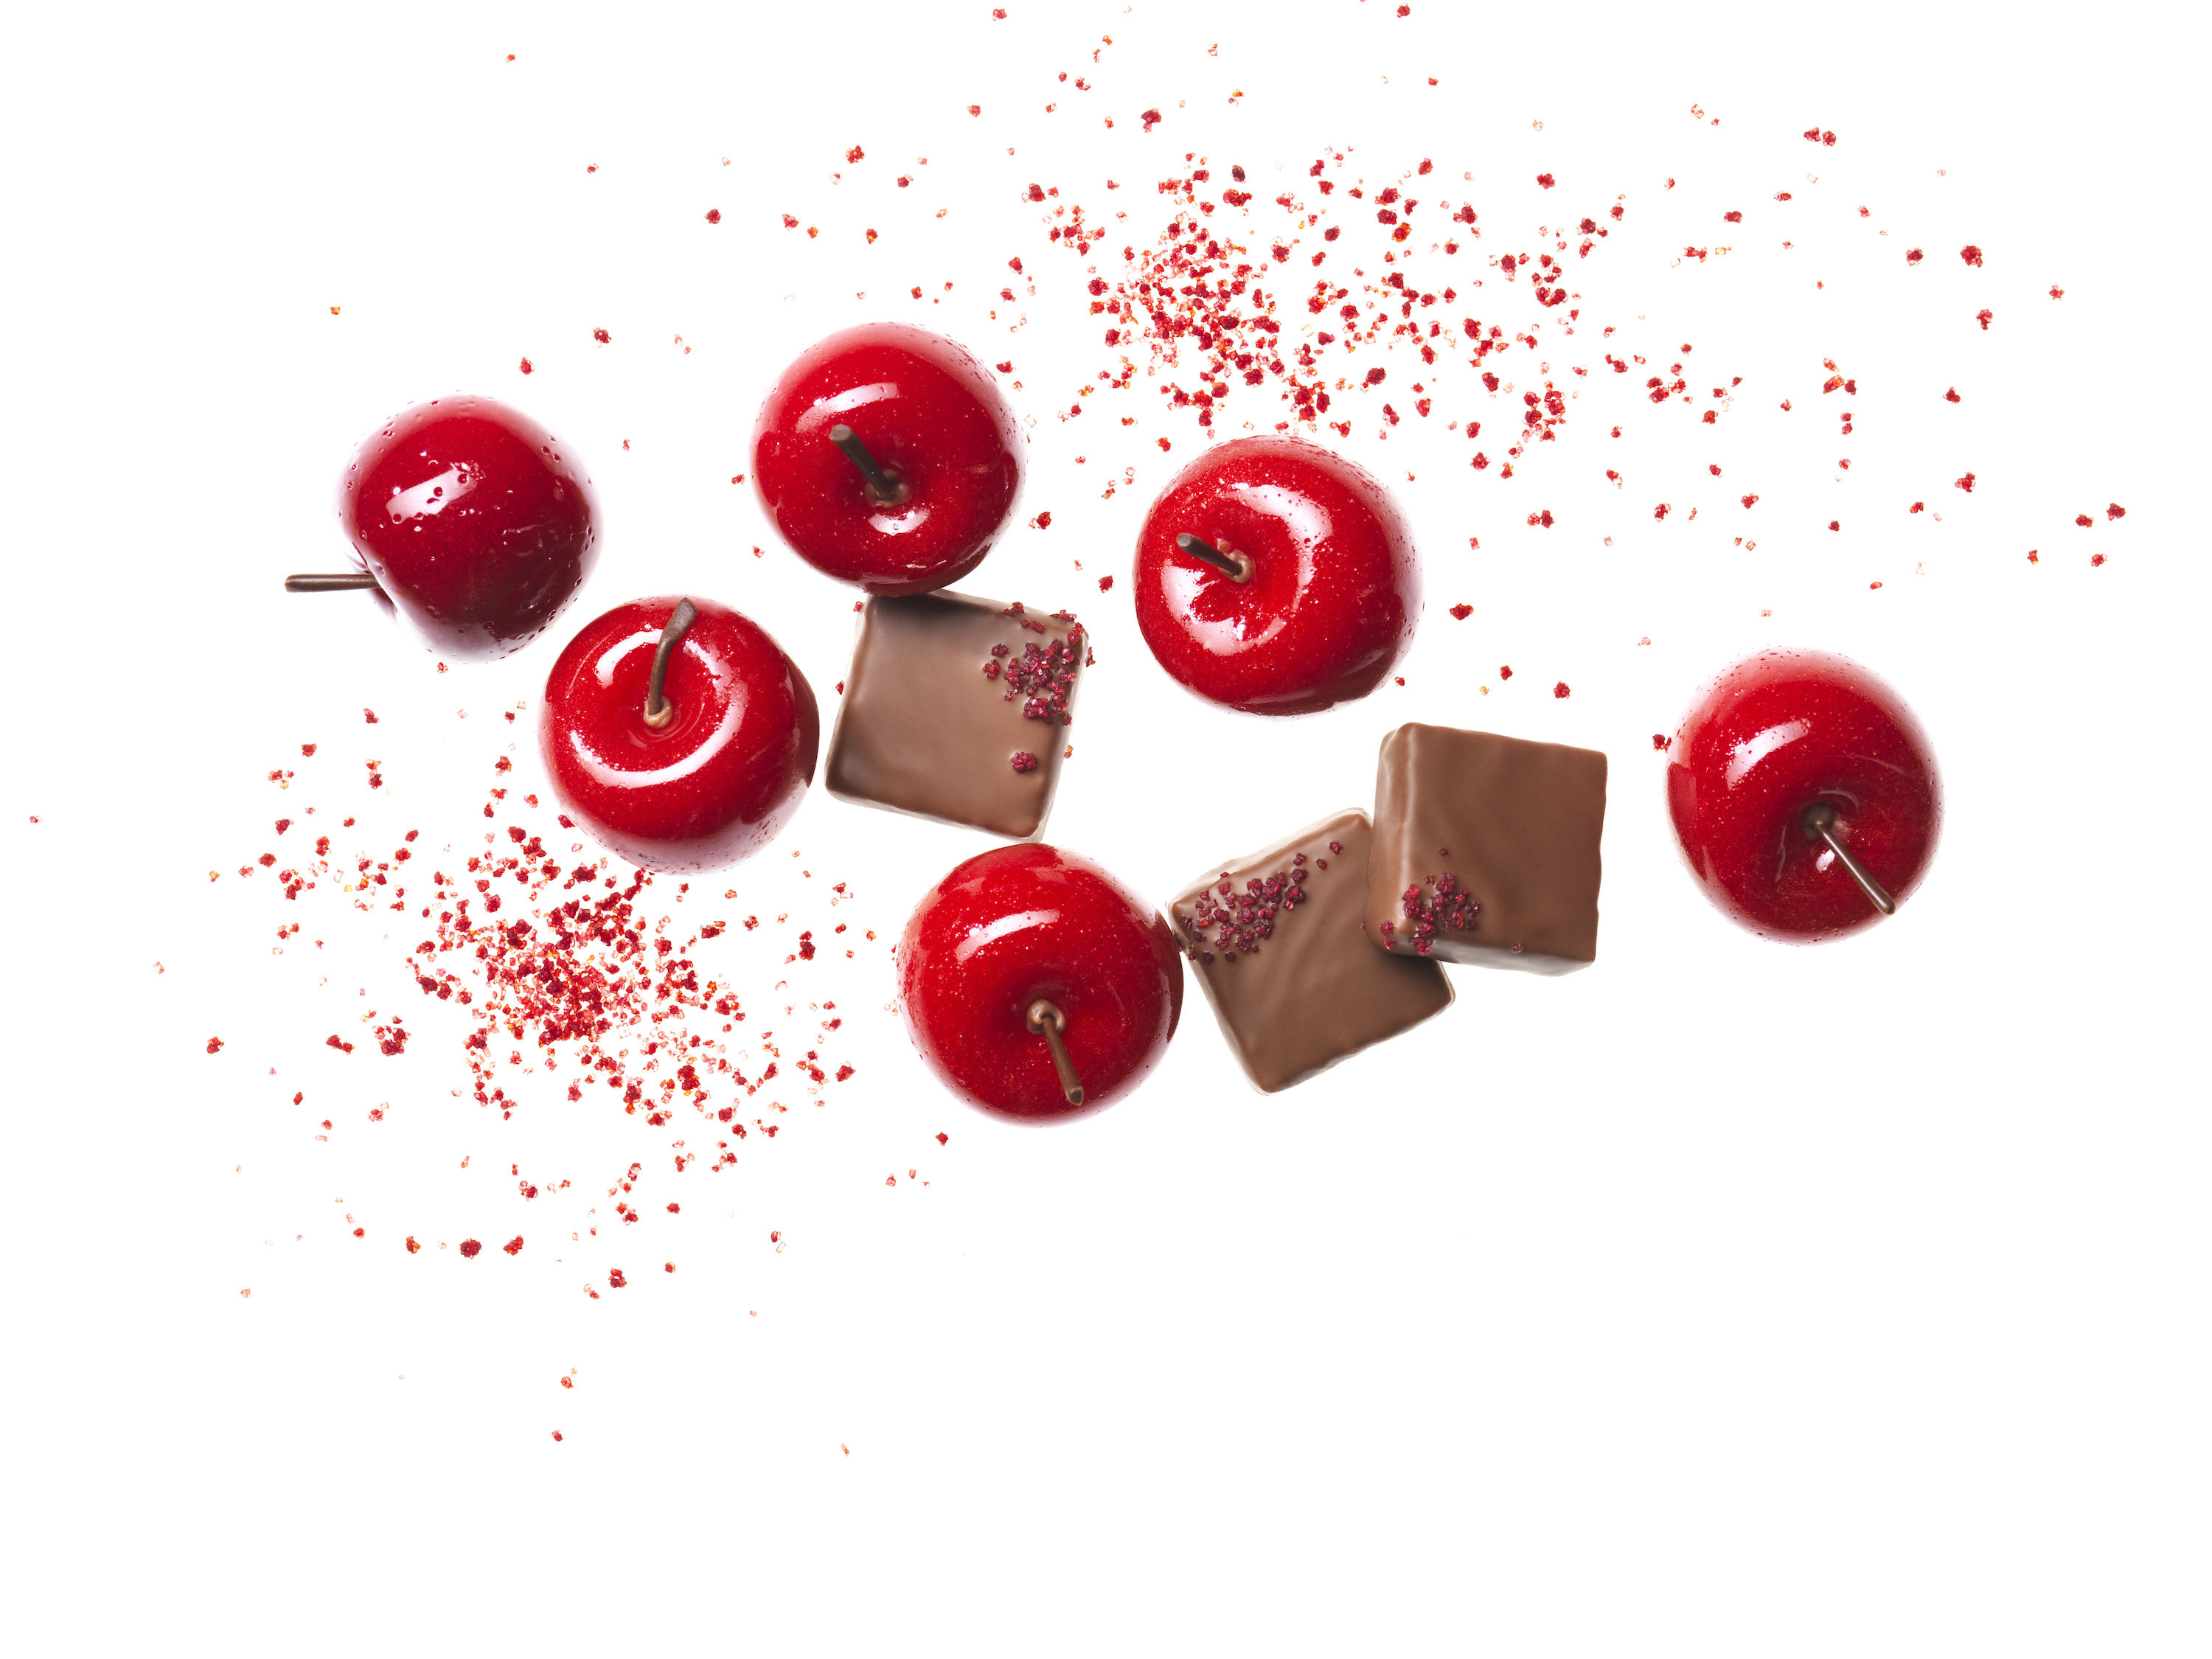 Grab a ‘Stolen Moment’ this Valentine’s Day with La Maison du Chocolat